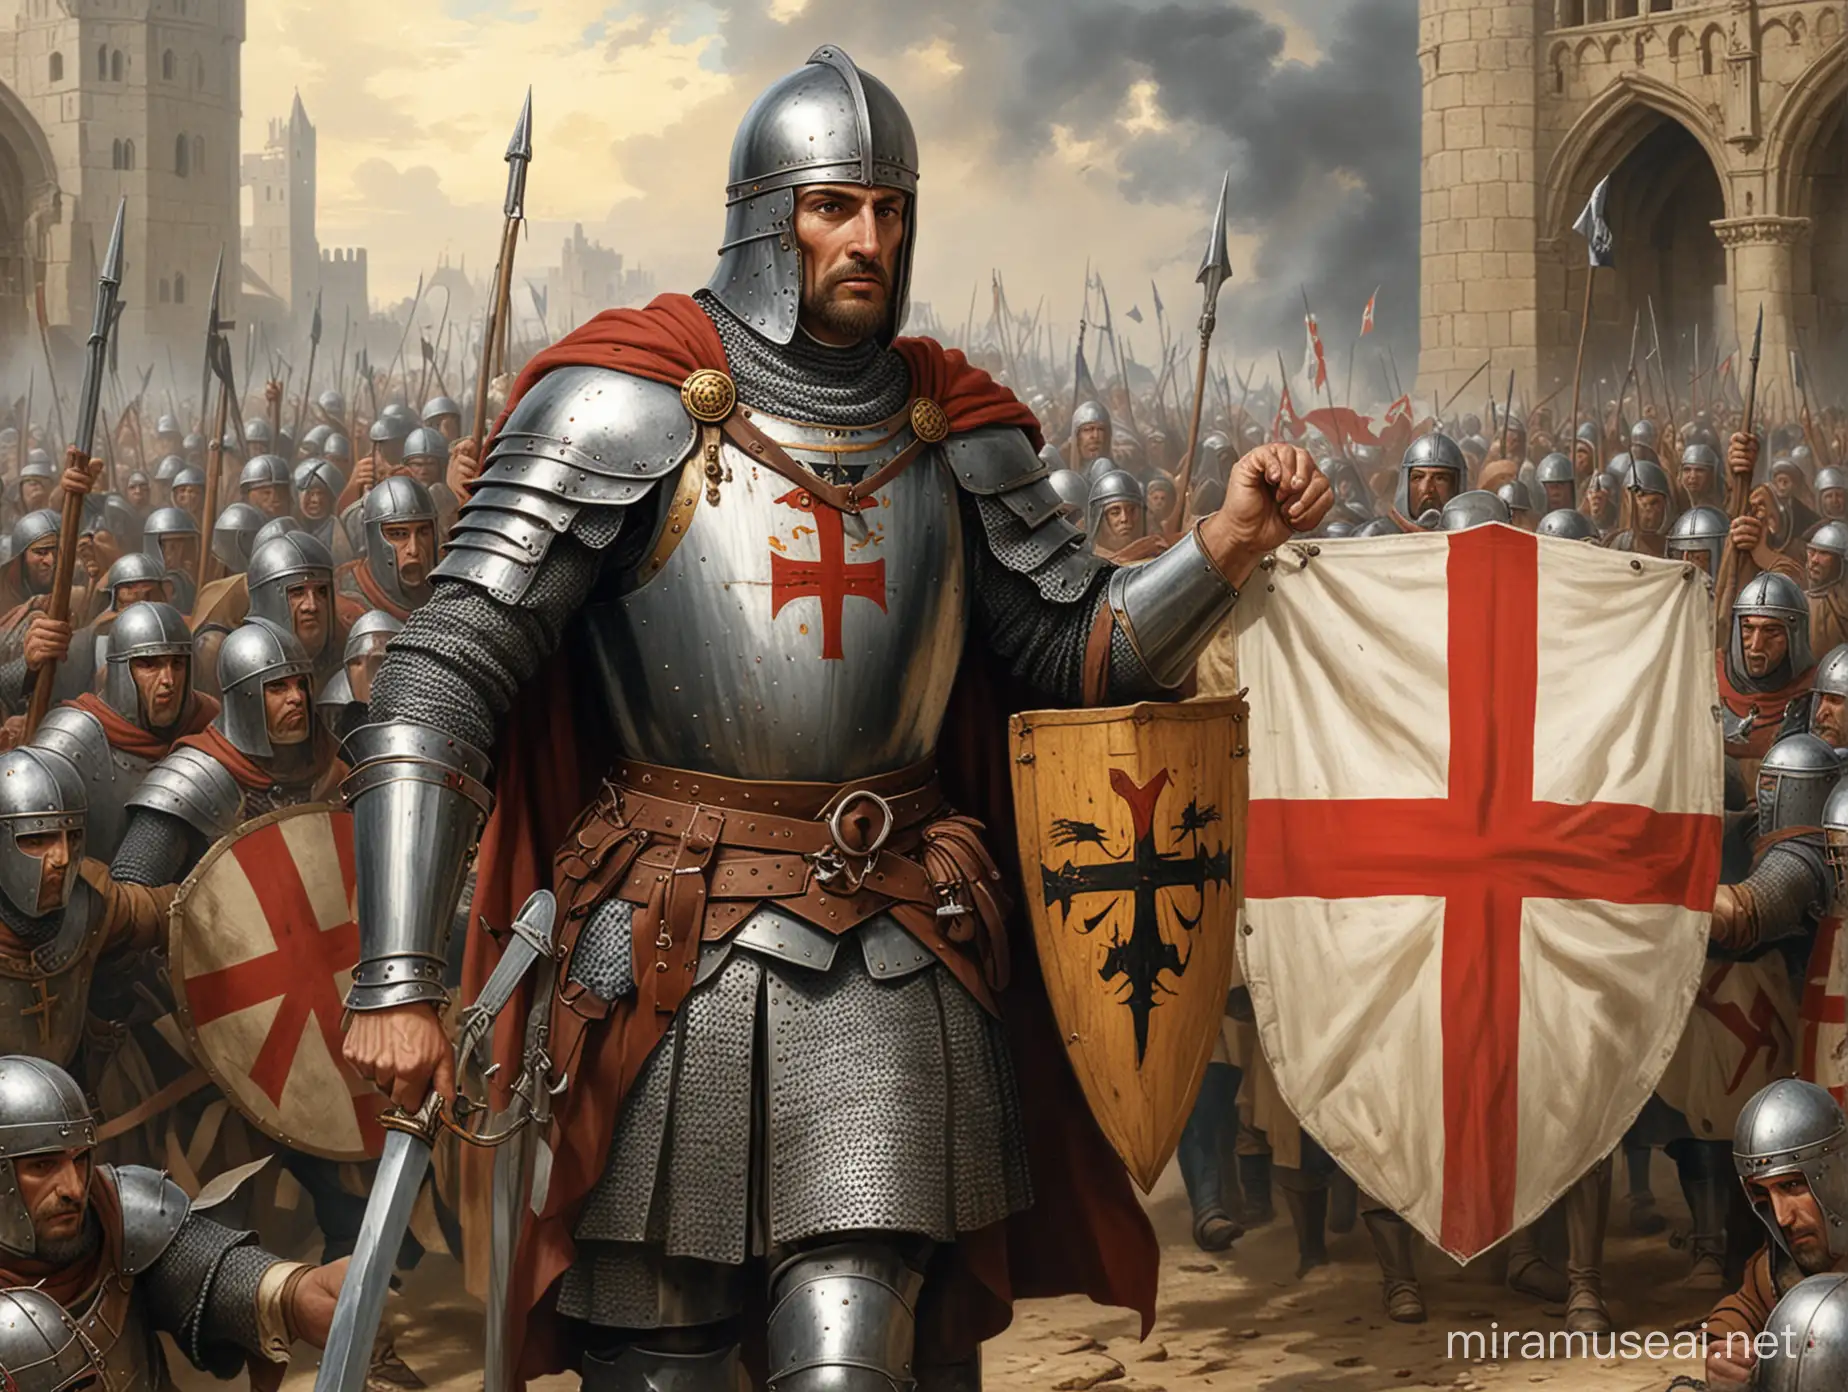 English Crusader strong against islam